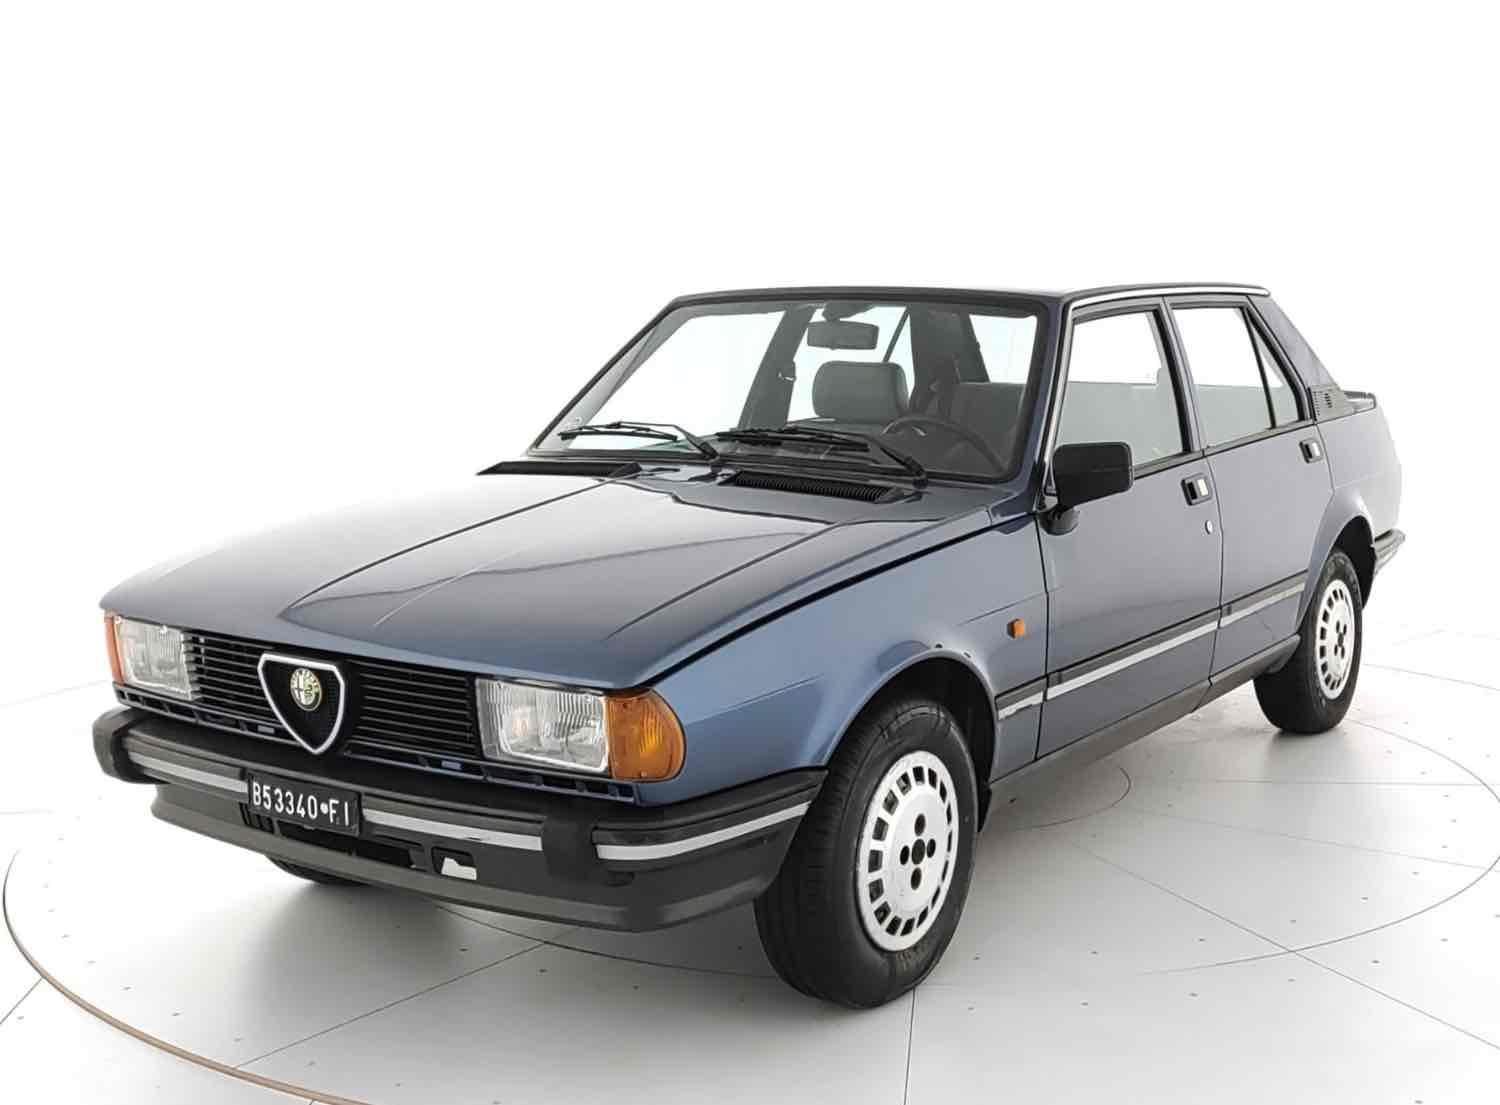 1981 - Alfa Romeo Giulietta 1.6 - NO RESERVE